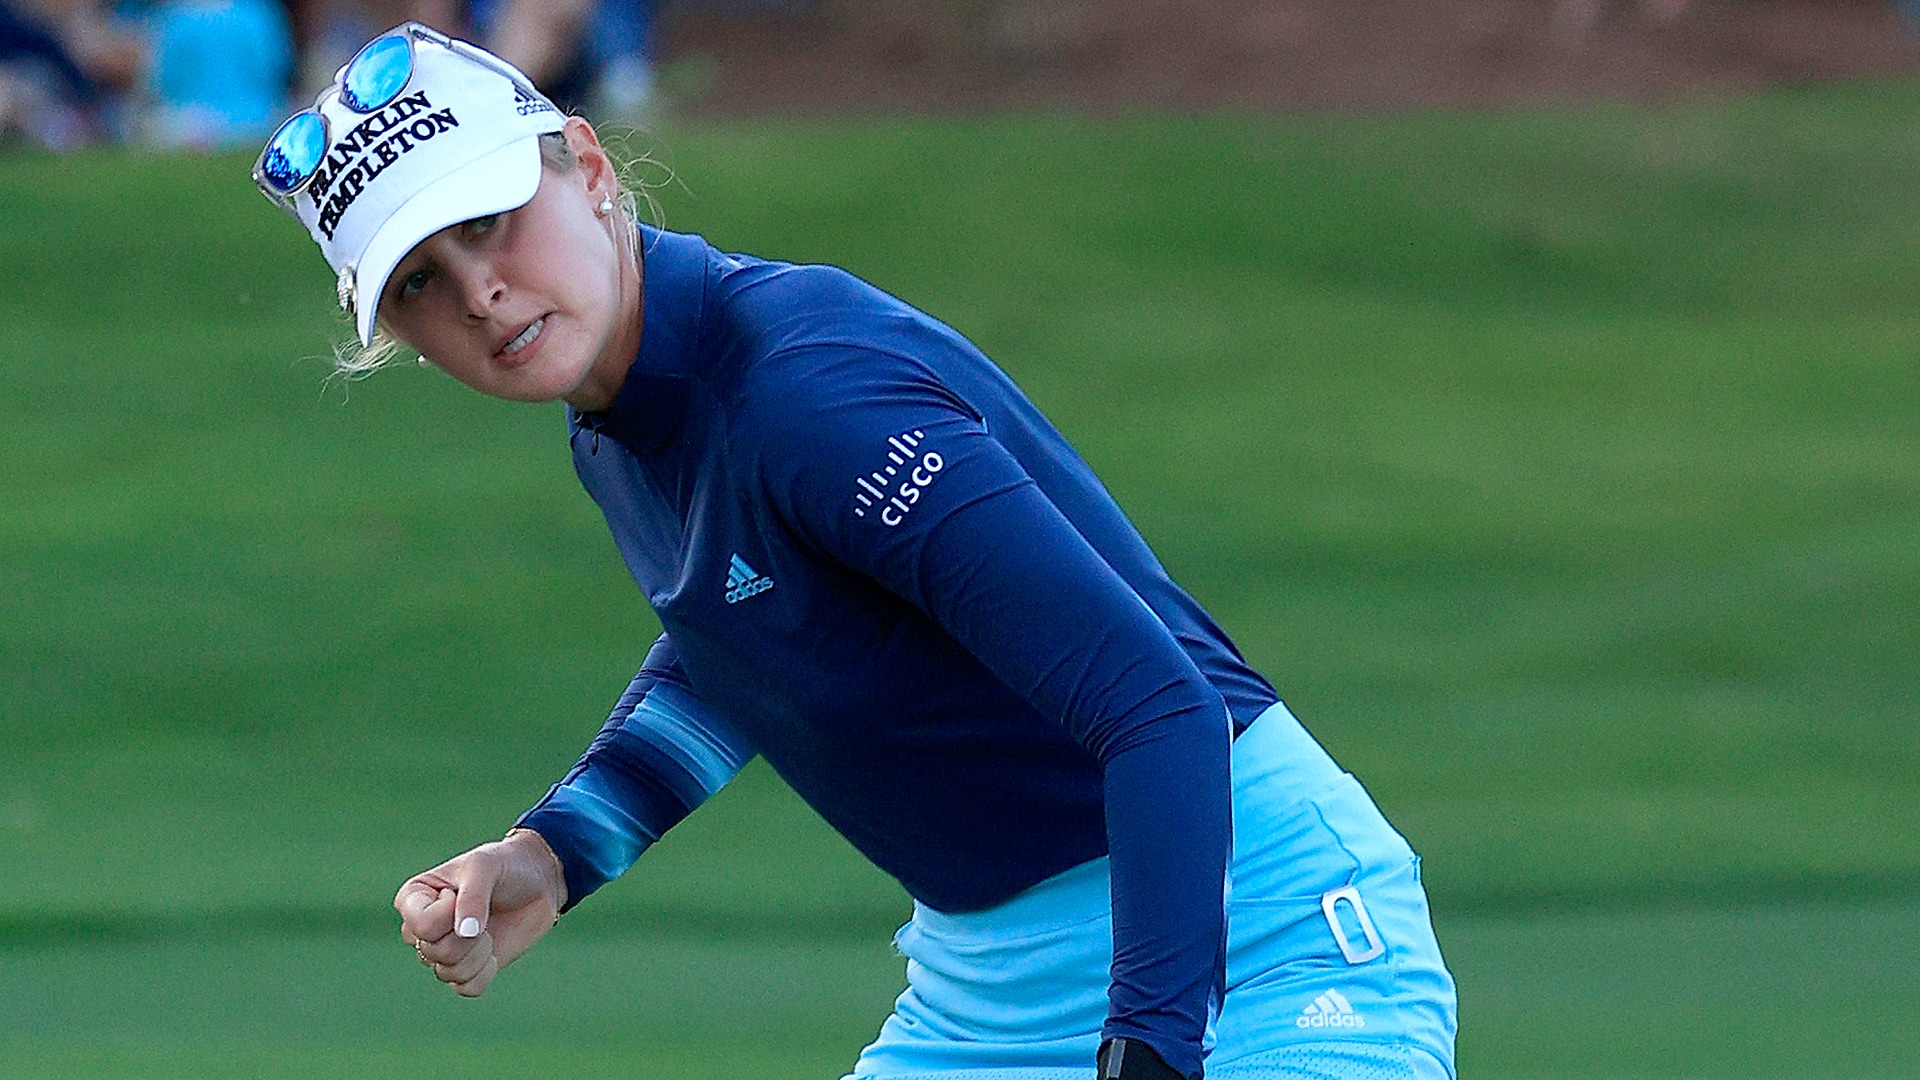 Watch: Jessica Korda sinks birdie bomb in playoff to win LPGA opener